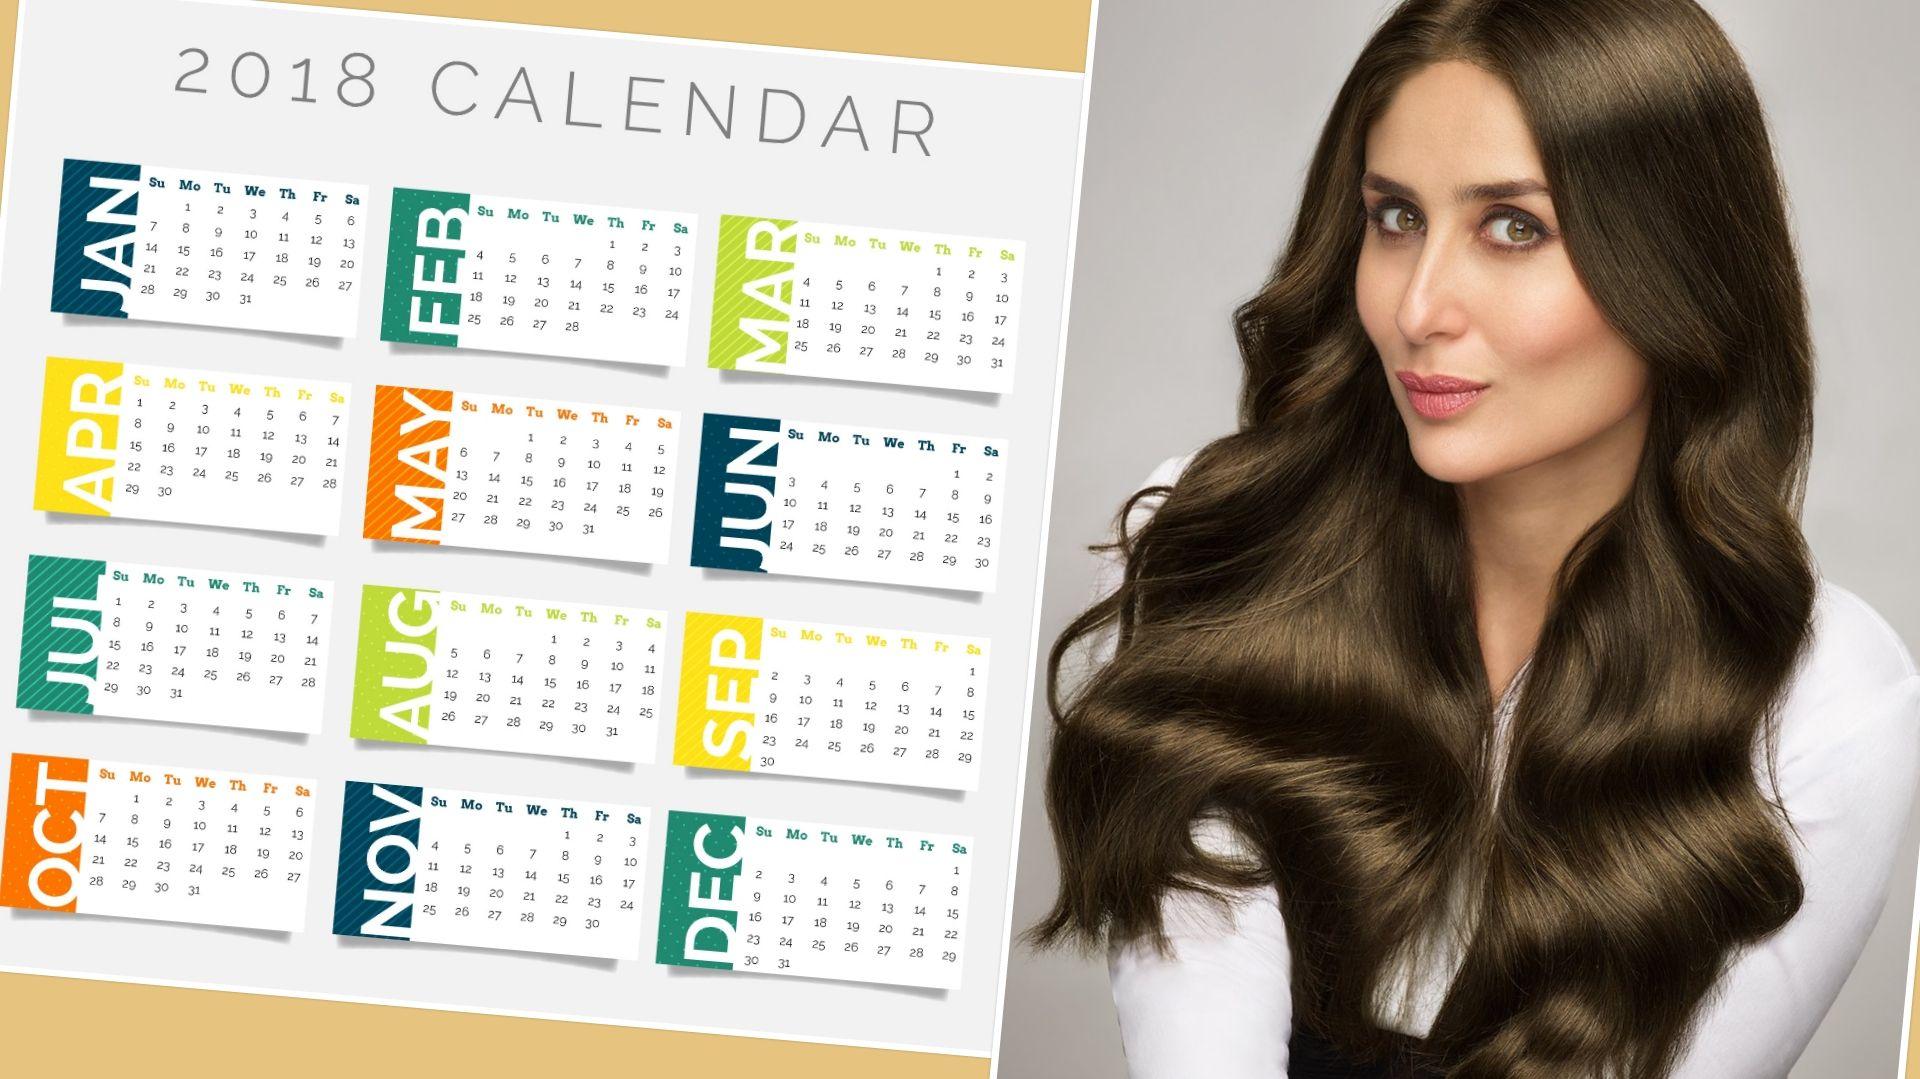 Bollywood Actors and Actress 2018 HD Calendar Wallpaper free download